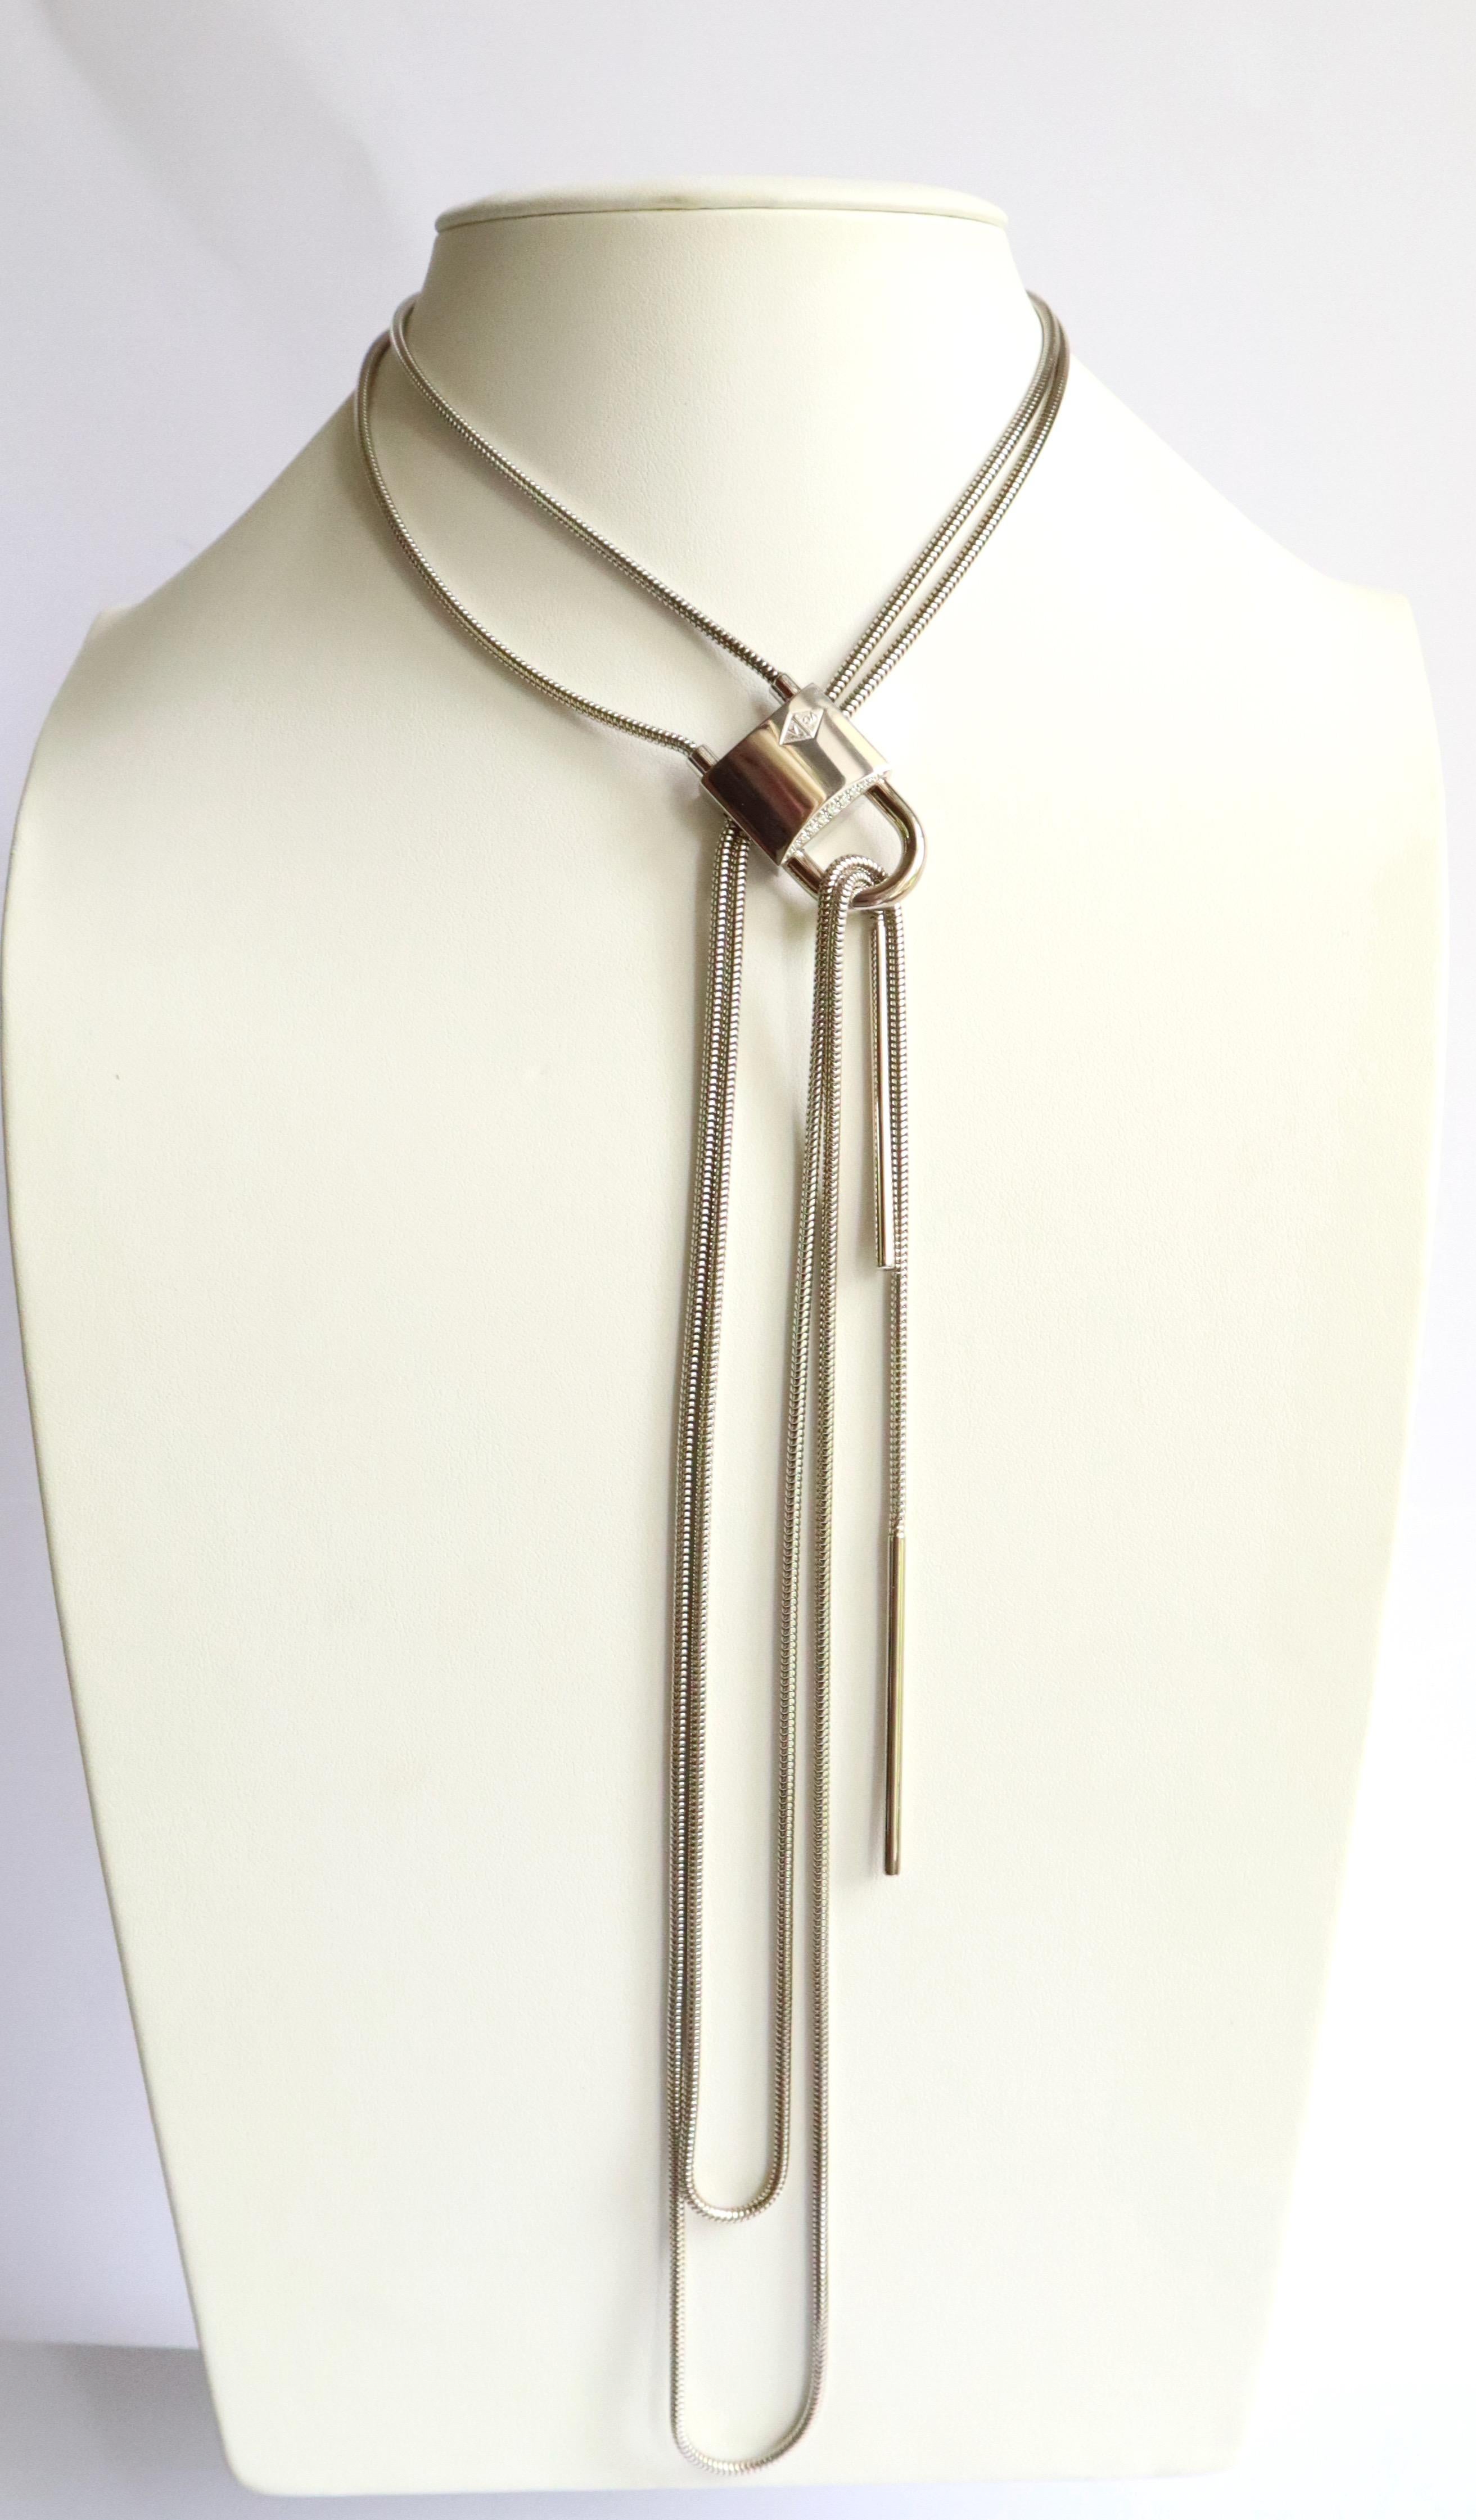 Van Cleef & Arpels Sautoir Cadenas Long Necklace in 18 Kt Gold and Diamonds For Sale 3